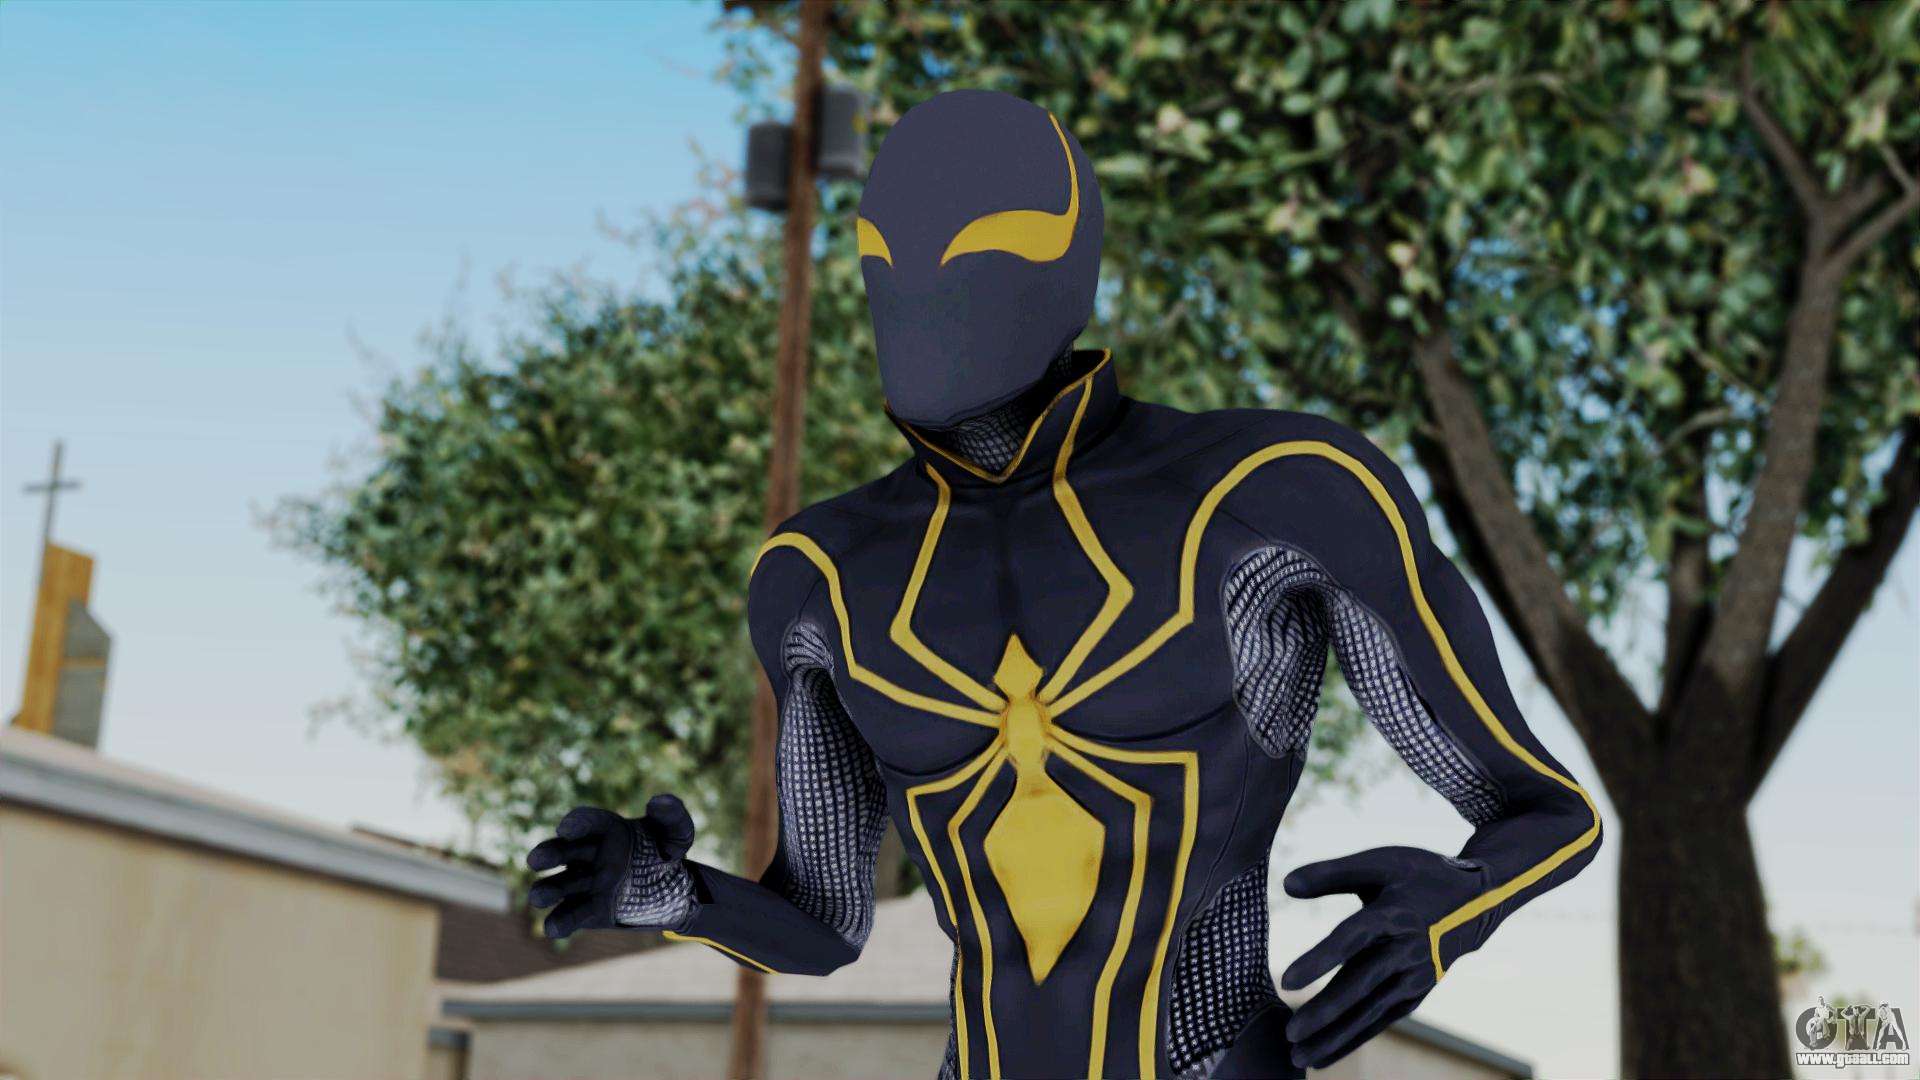 spider armour mk 2